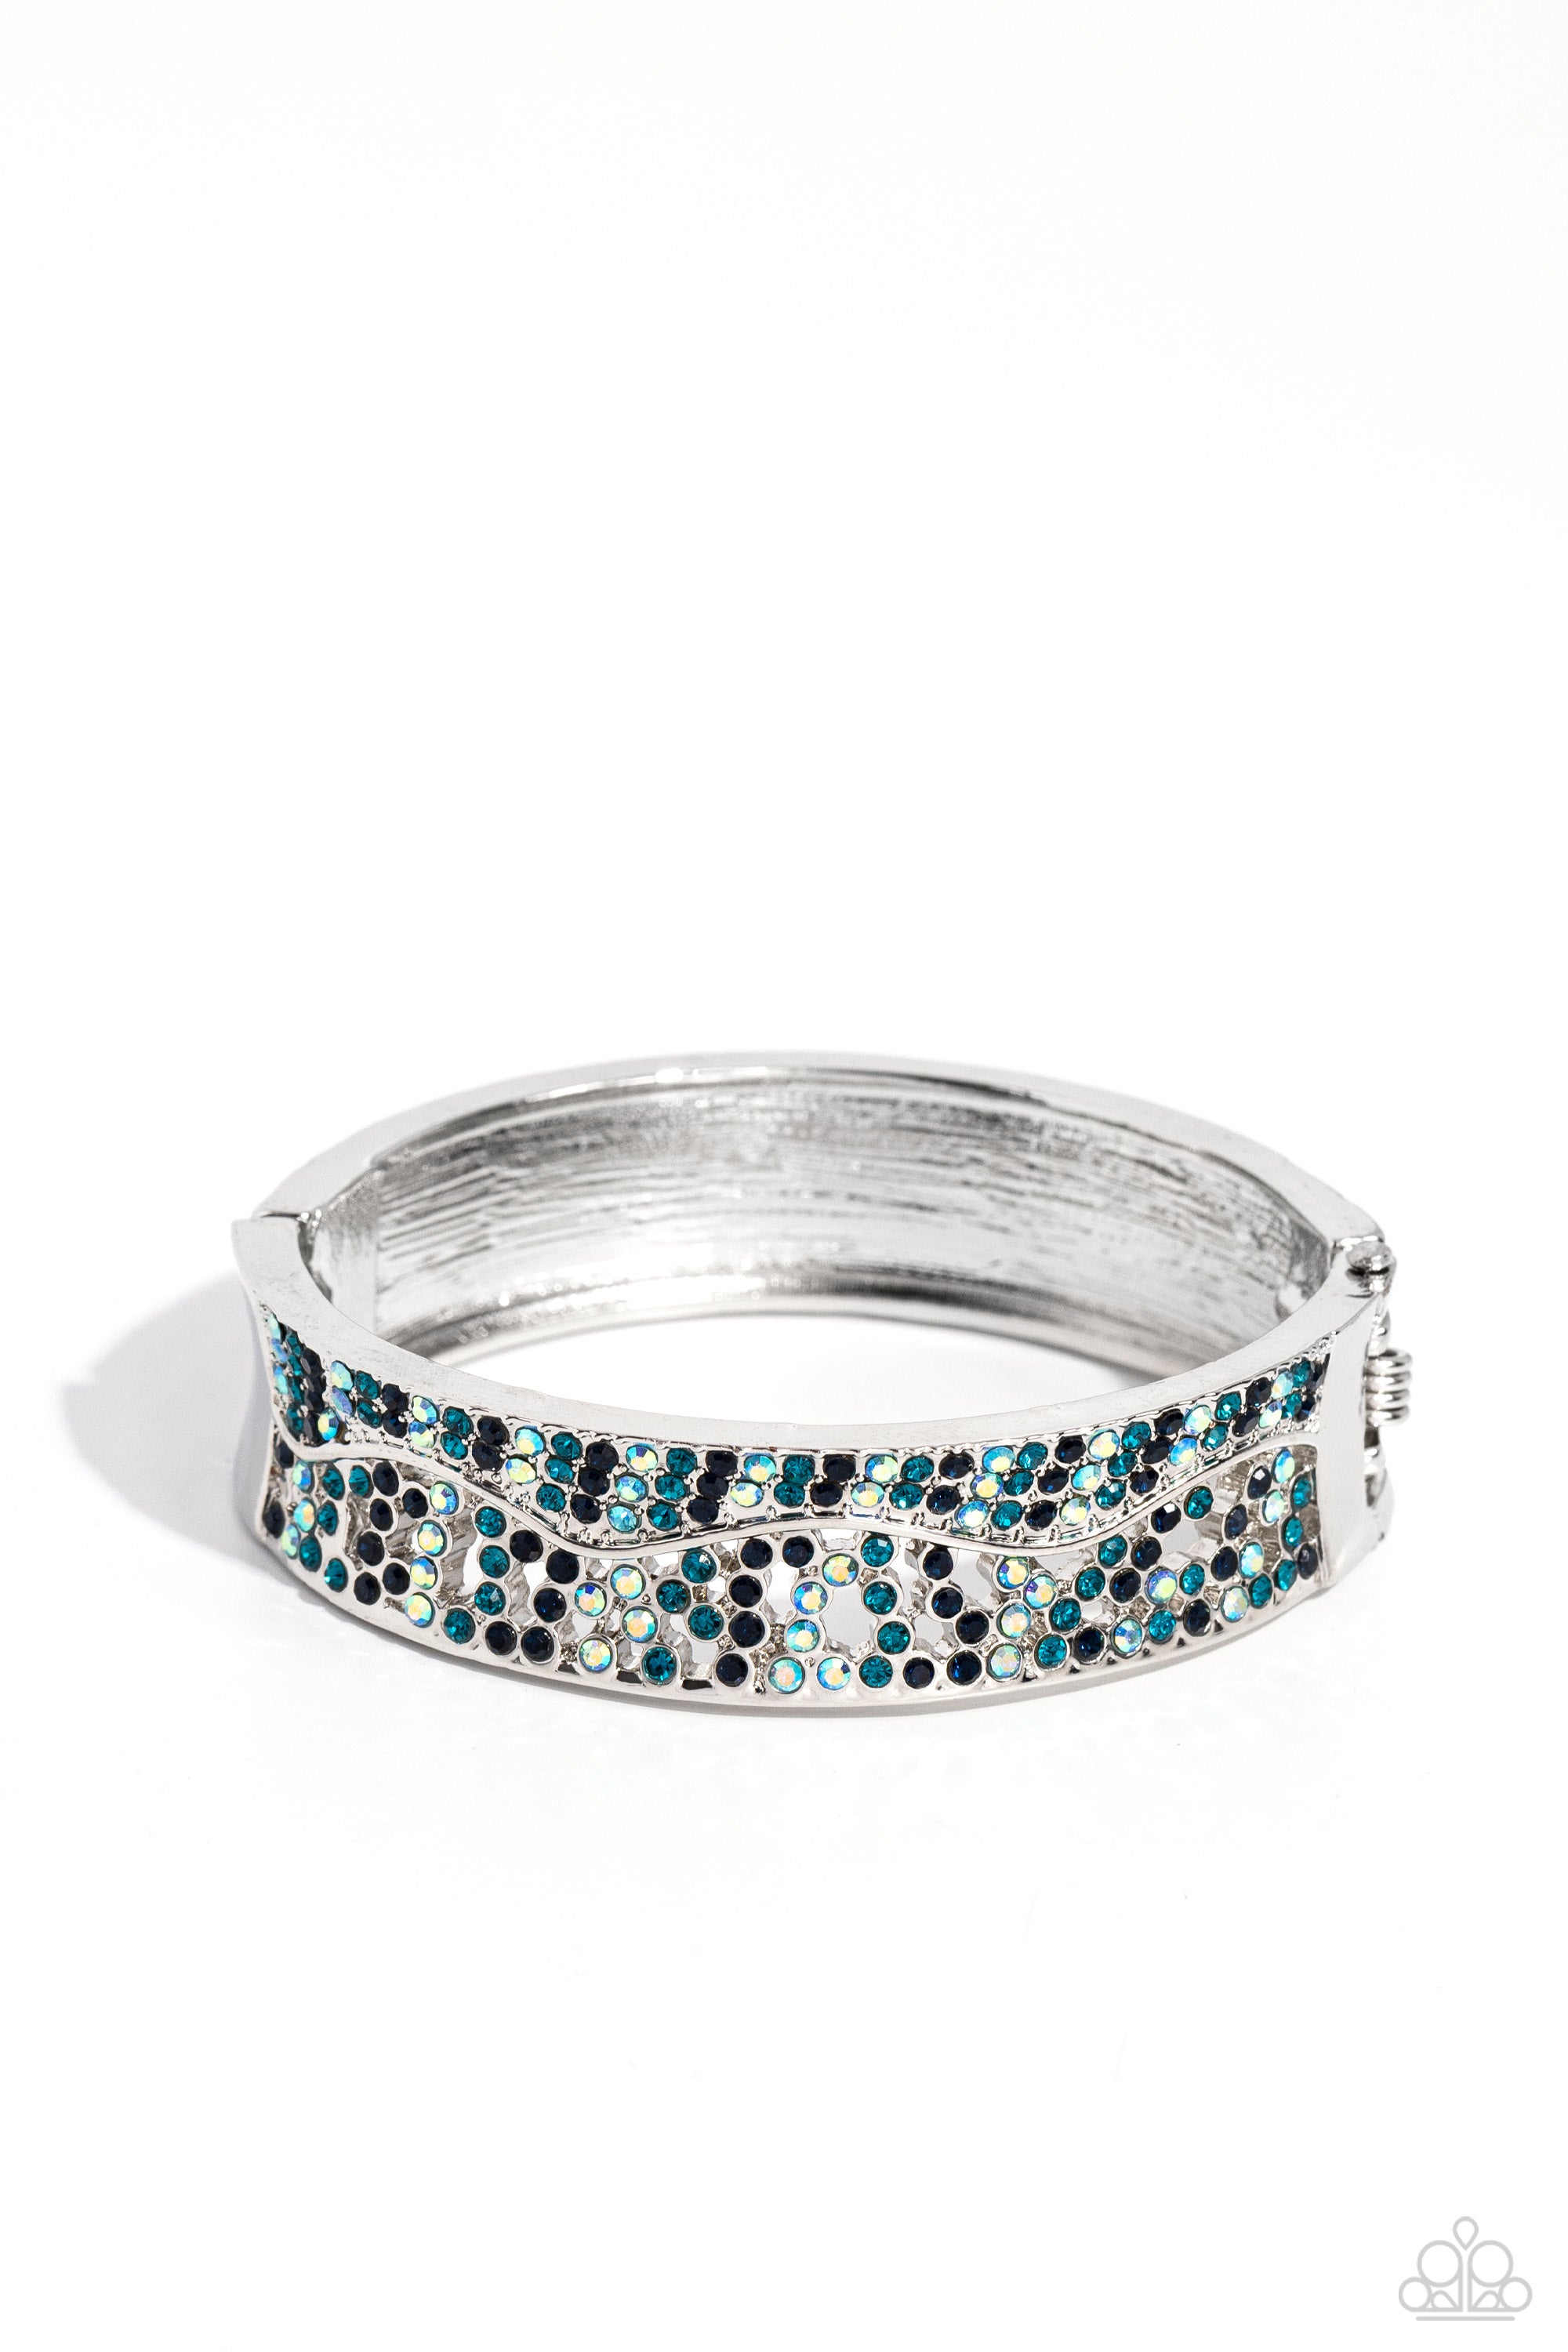 Wavy Whimsy Blue Rhinestone Bracelet - Paparazzi Accessories- lightbox - CarasShop.com - $5 Jewelry by Cara Jewels